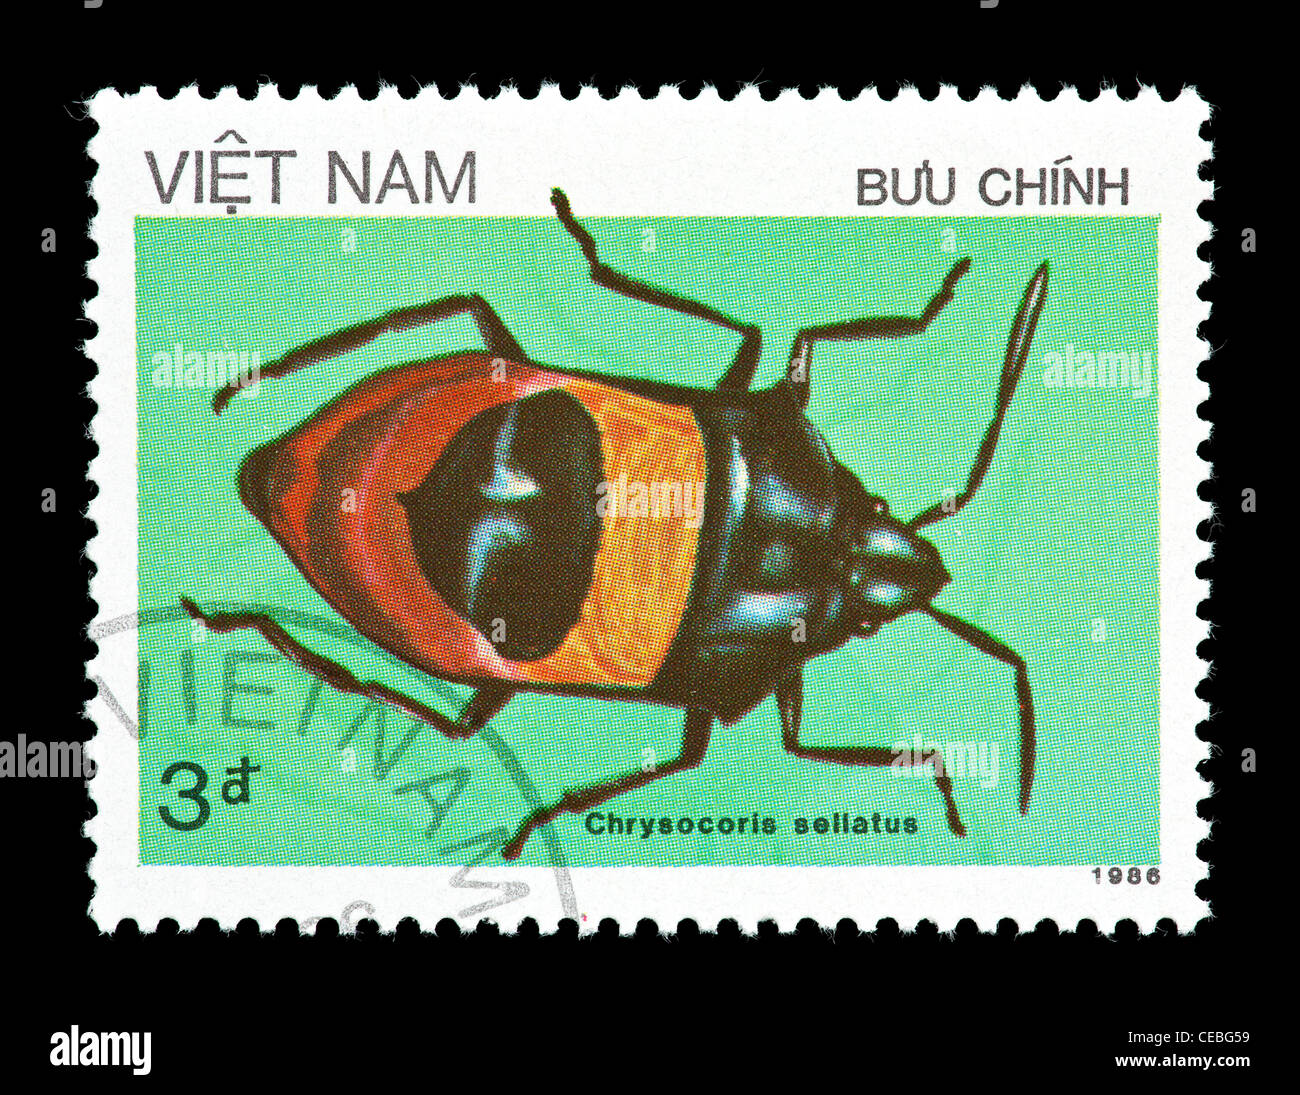 Postage stamp from Vietnam depicting a true bug (Chrysocoris sellatus) Stock Photo